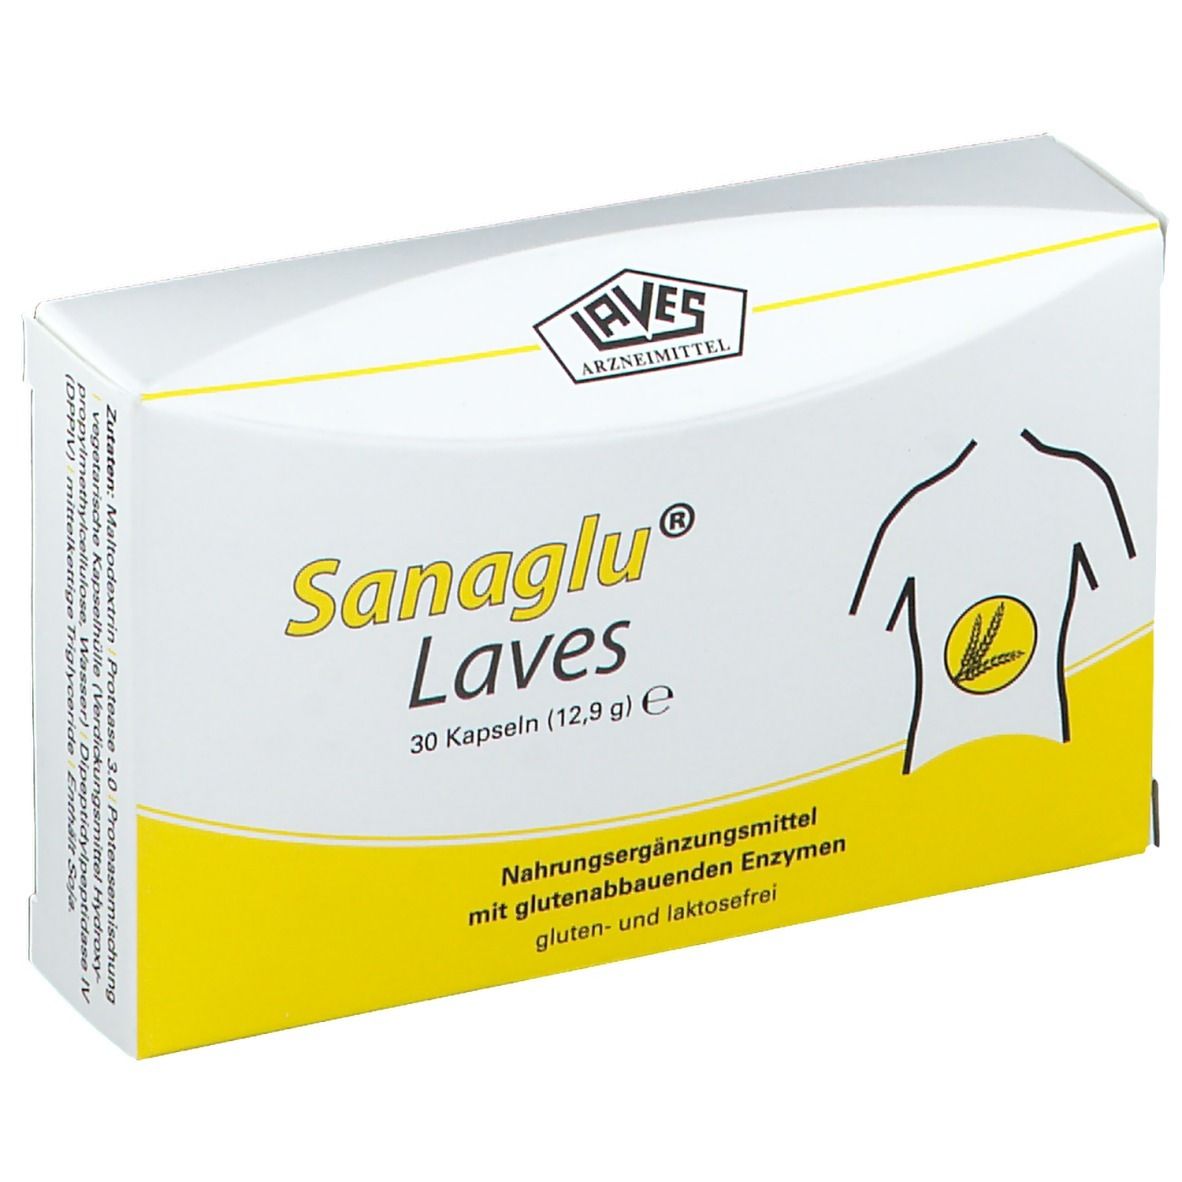 Sanaglu® Laves